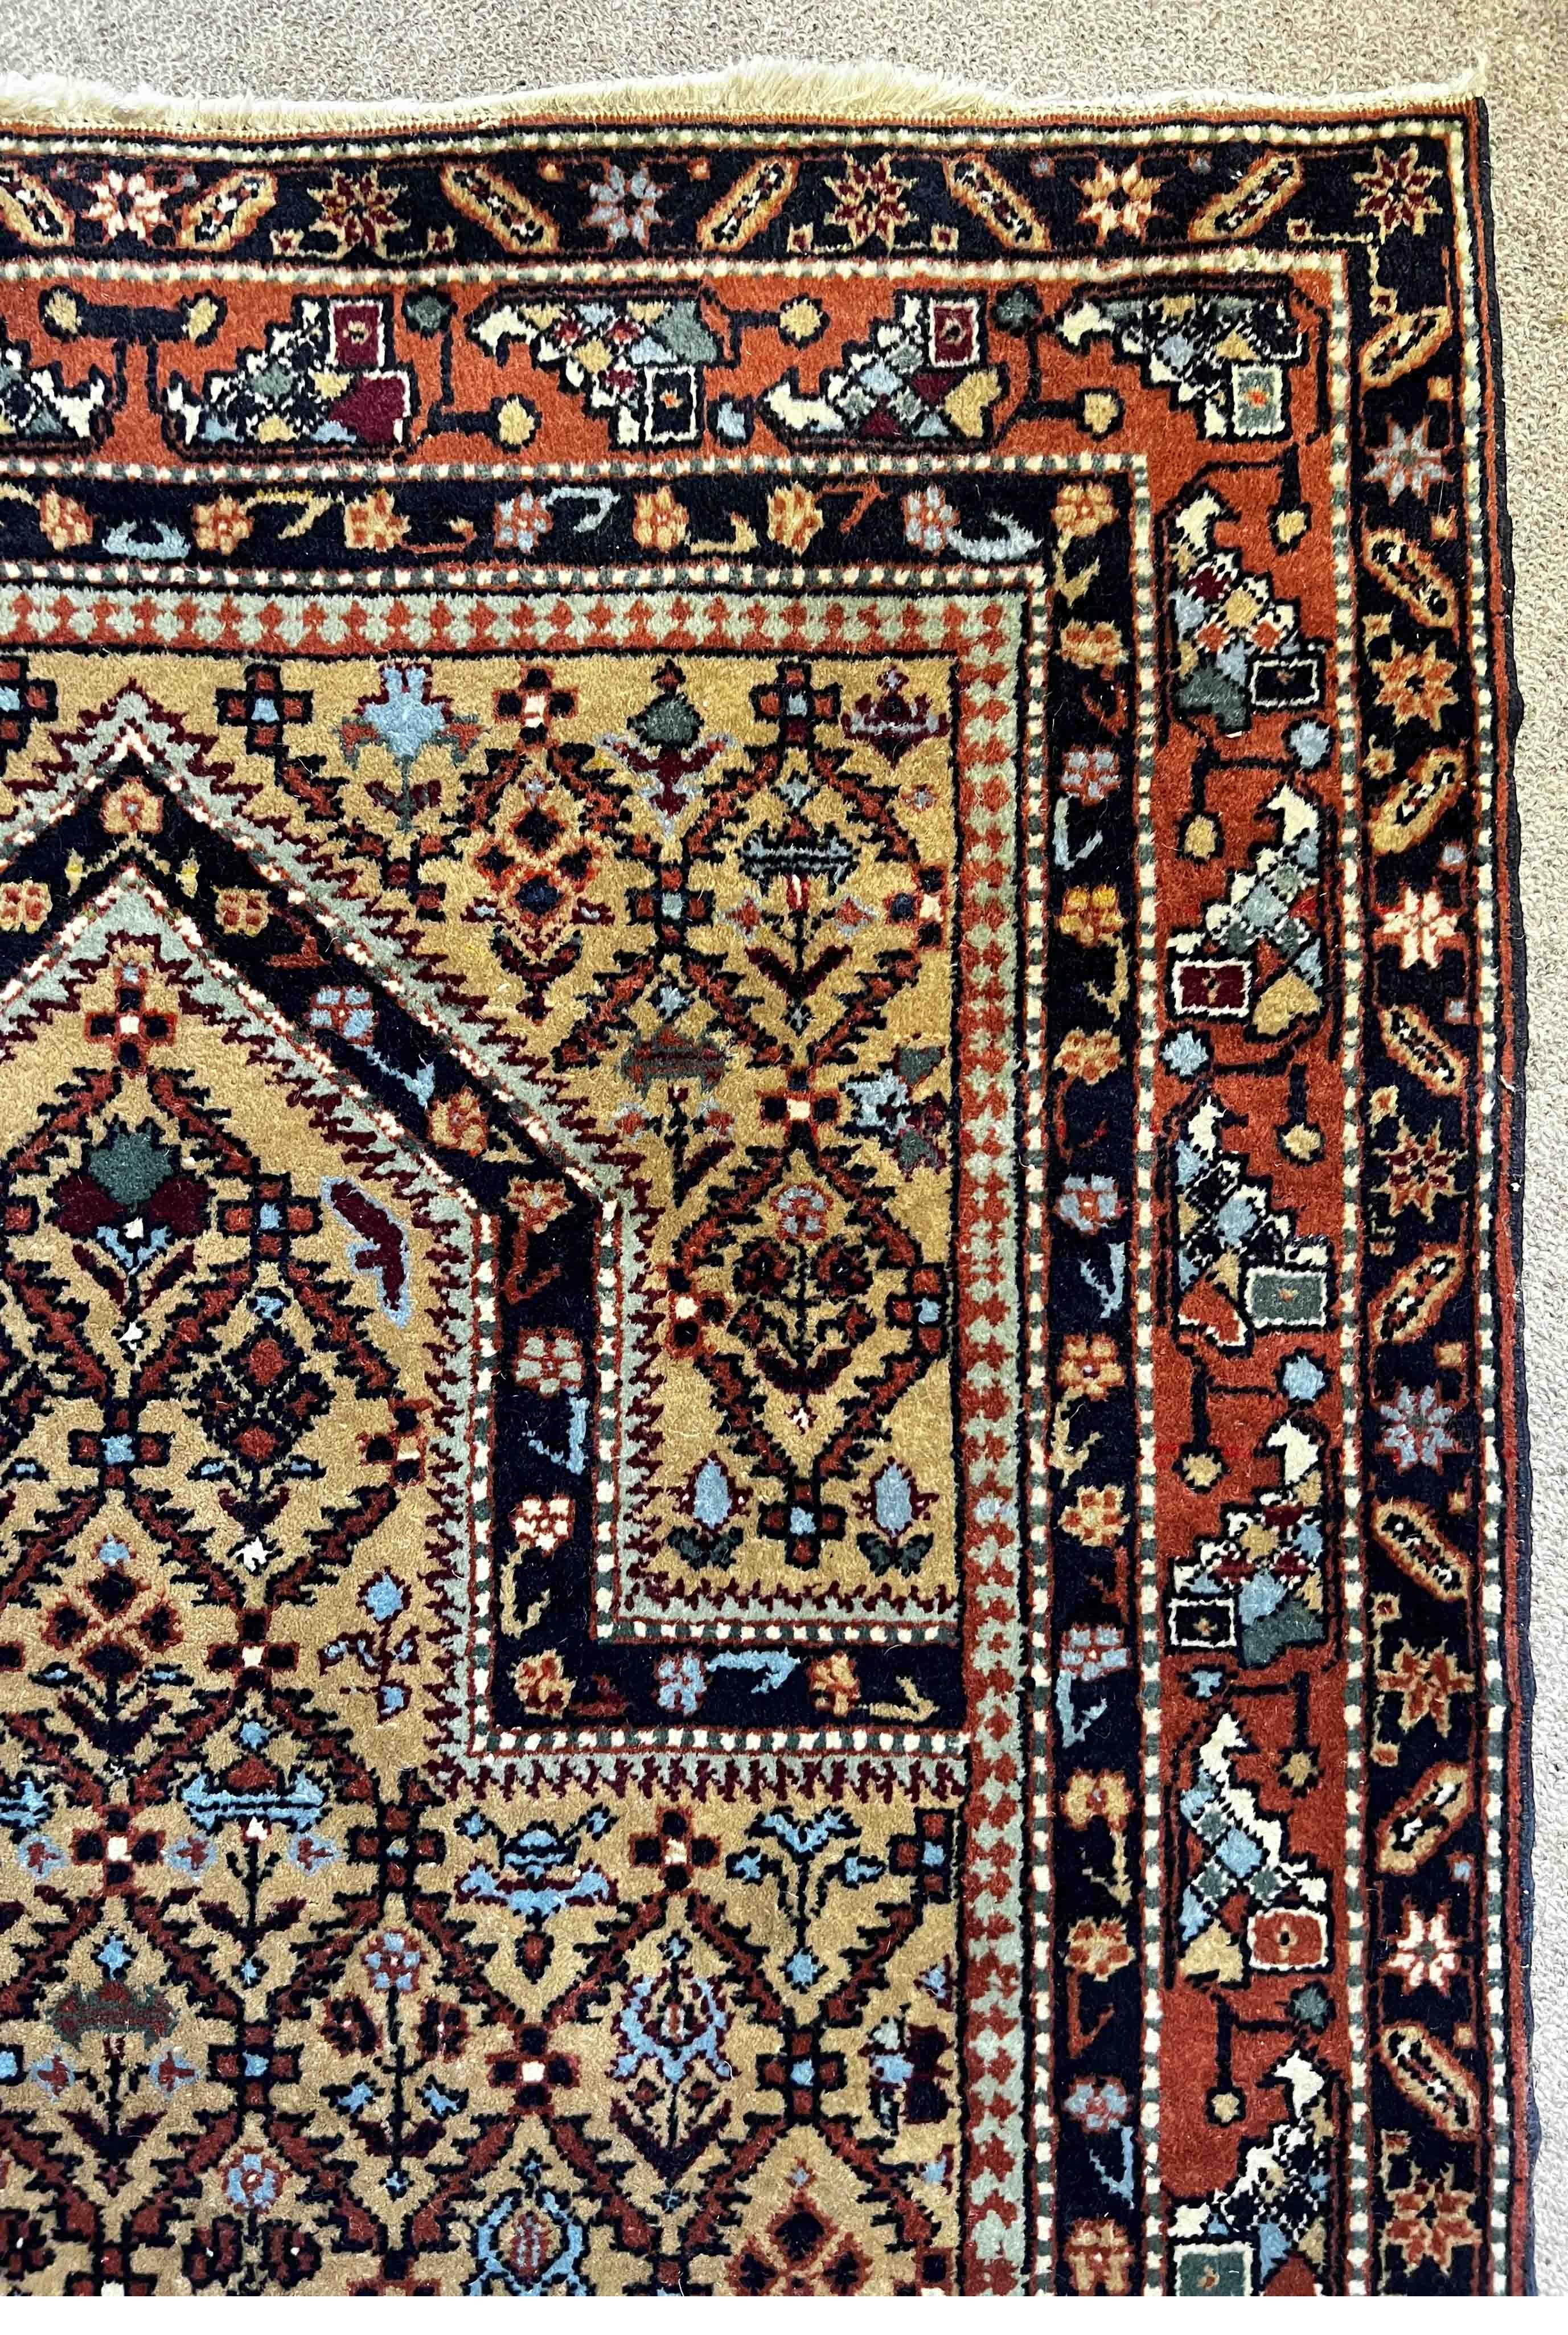  Caucasian Chirvan Carpet, 19th Century - N° 730 For Sale 1